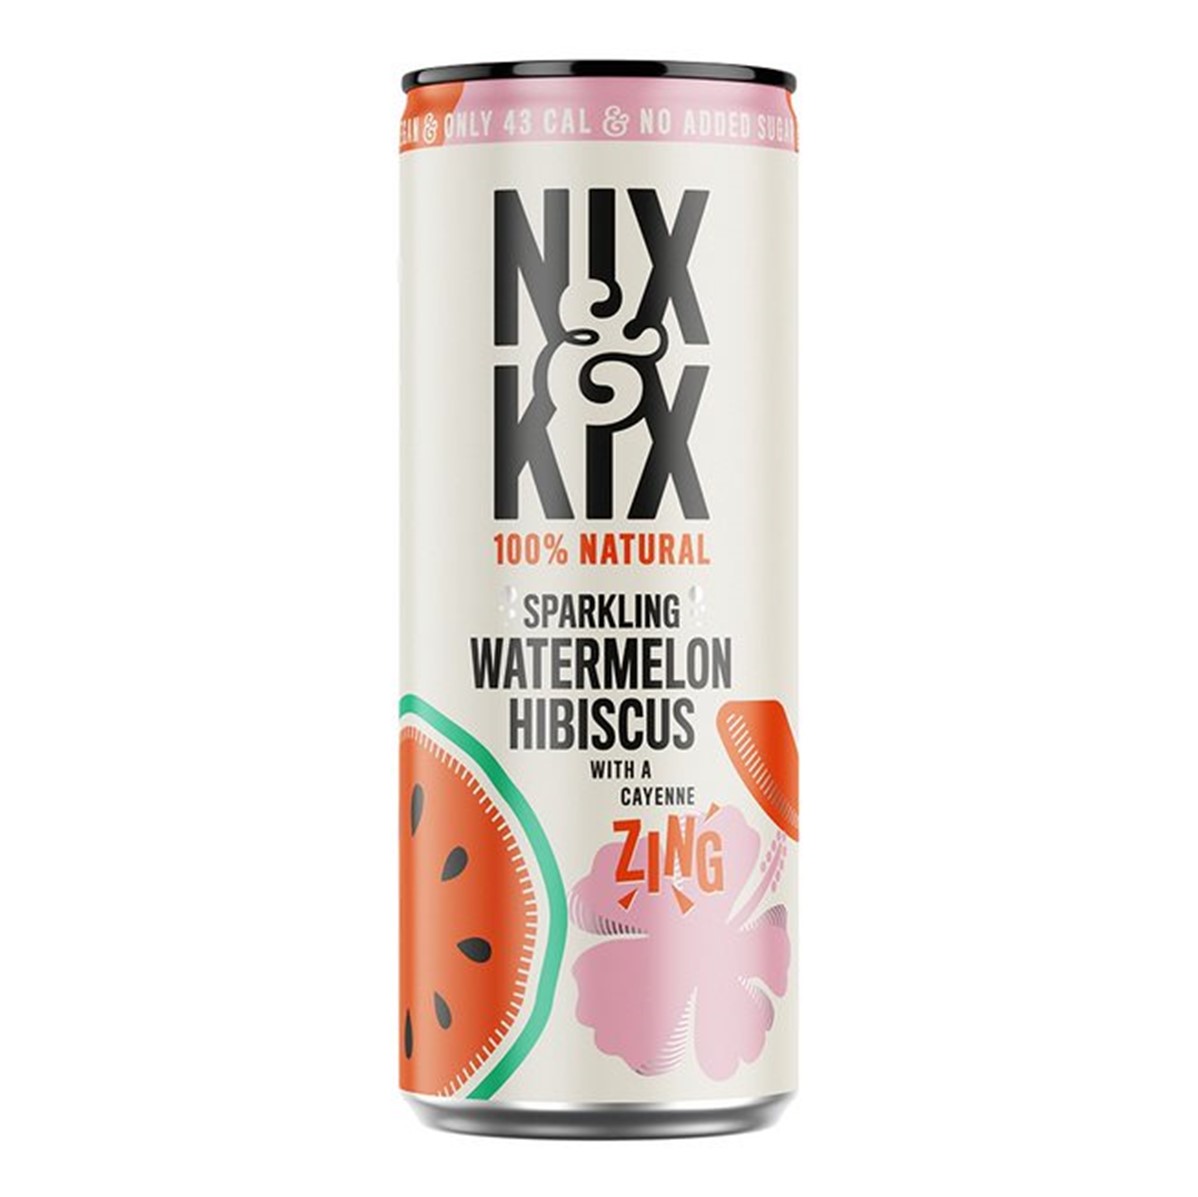 Nix & Kix Watermelon Hibiscus - 24x250ml cans